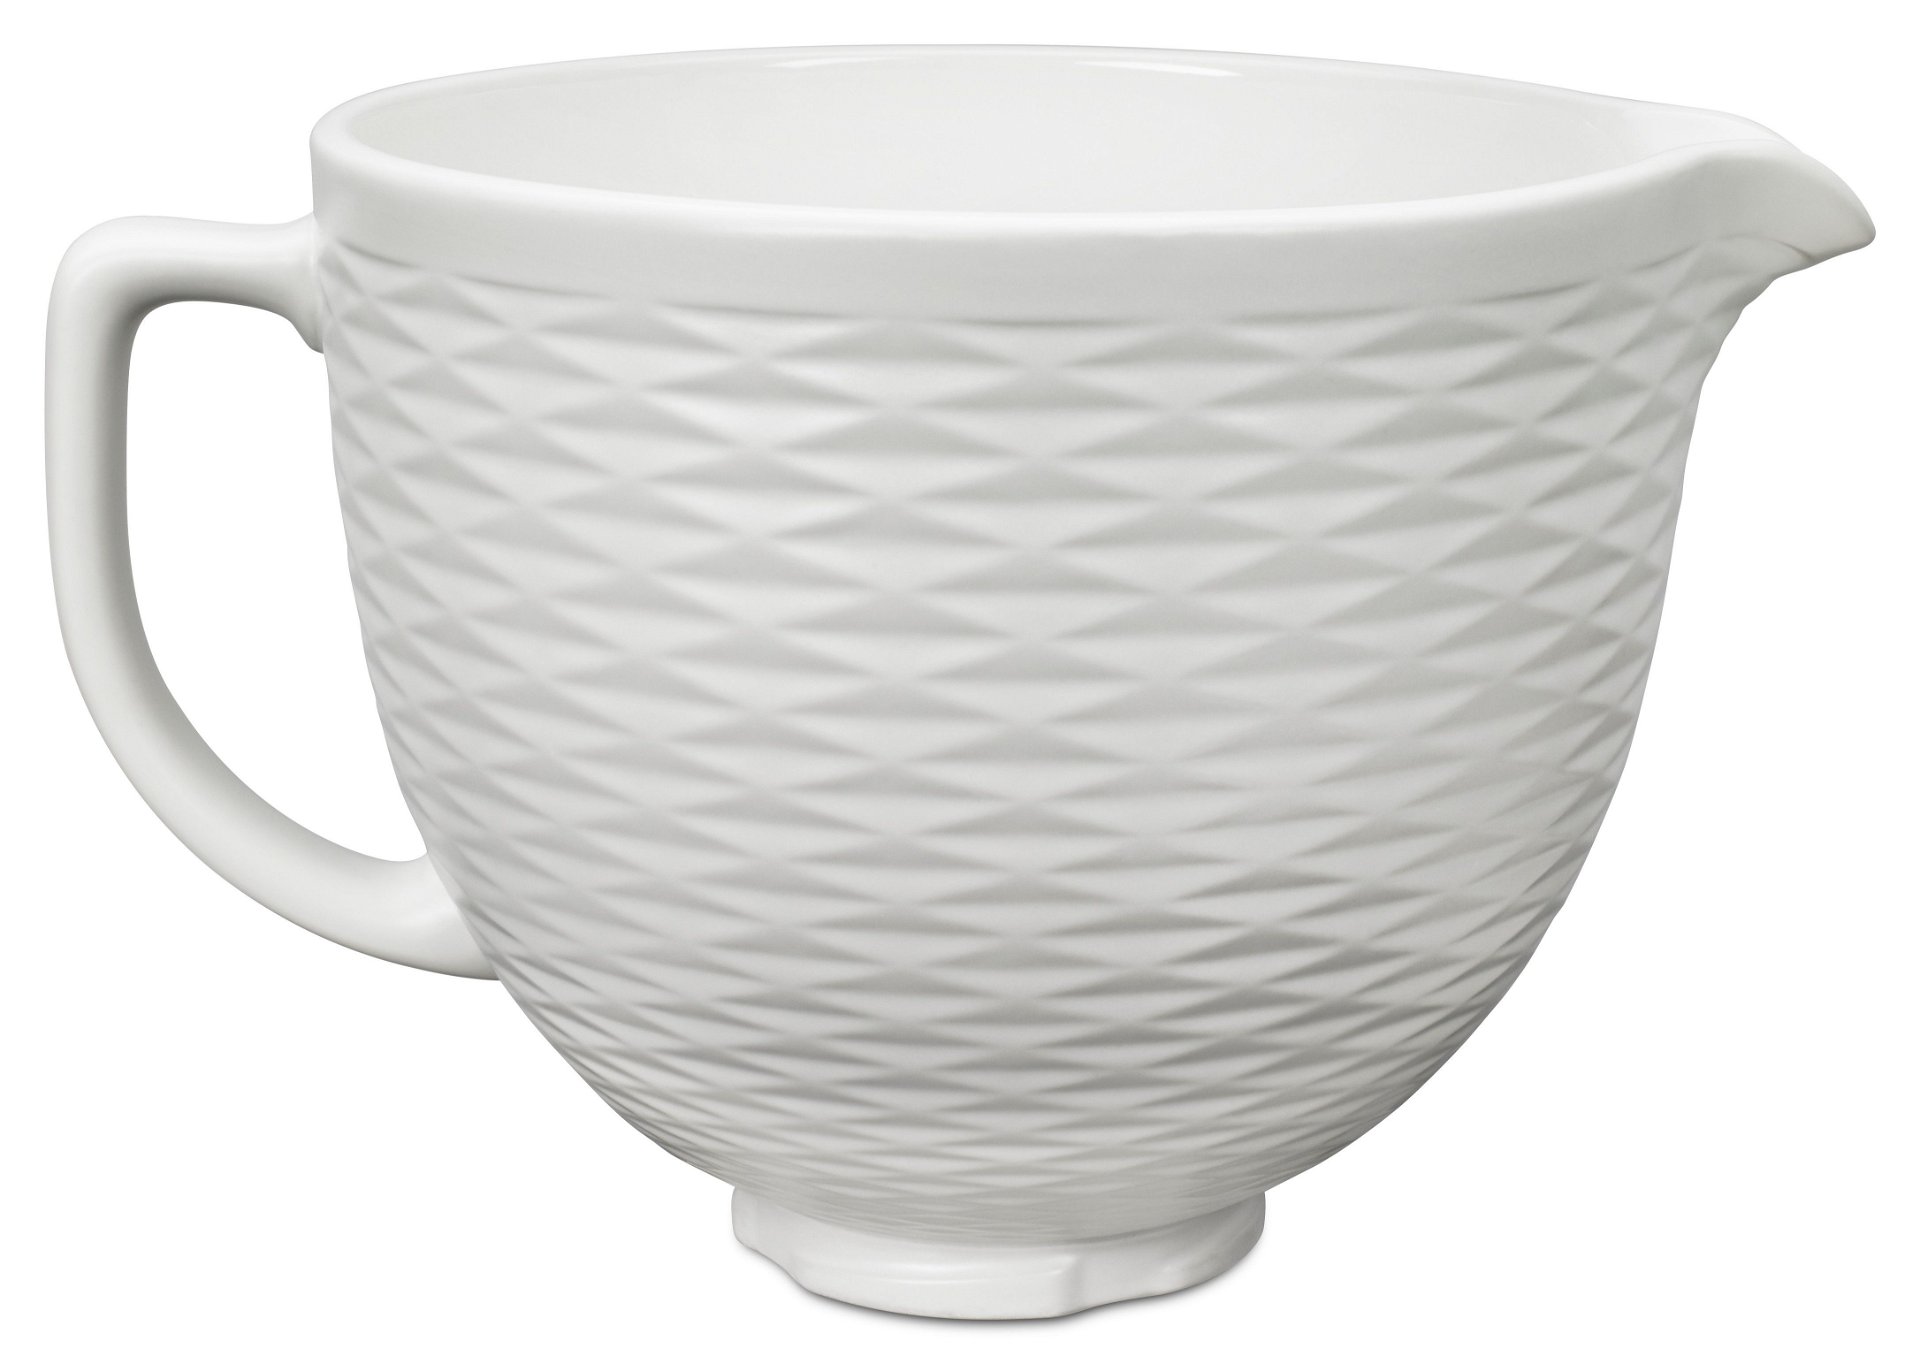 KitchenAid 5 Quart White Mermaid Lace Ceramic Bowl